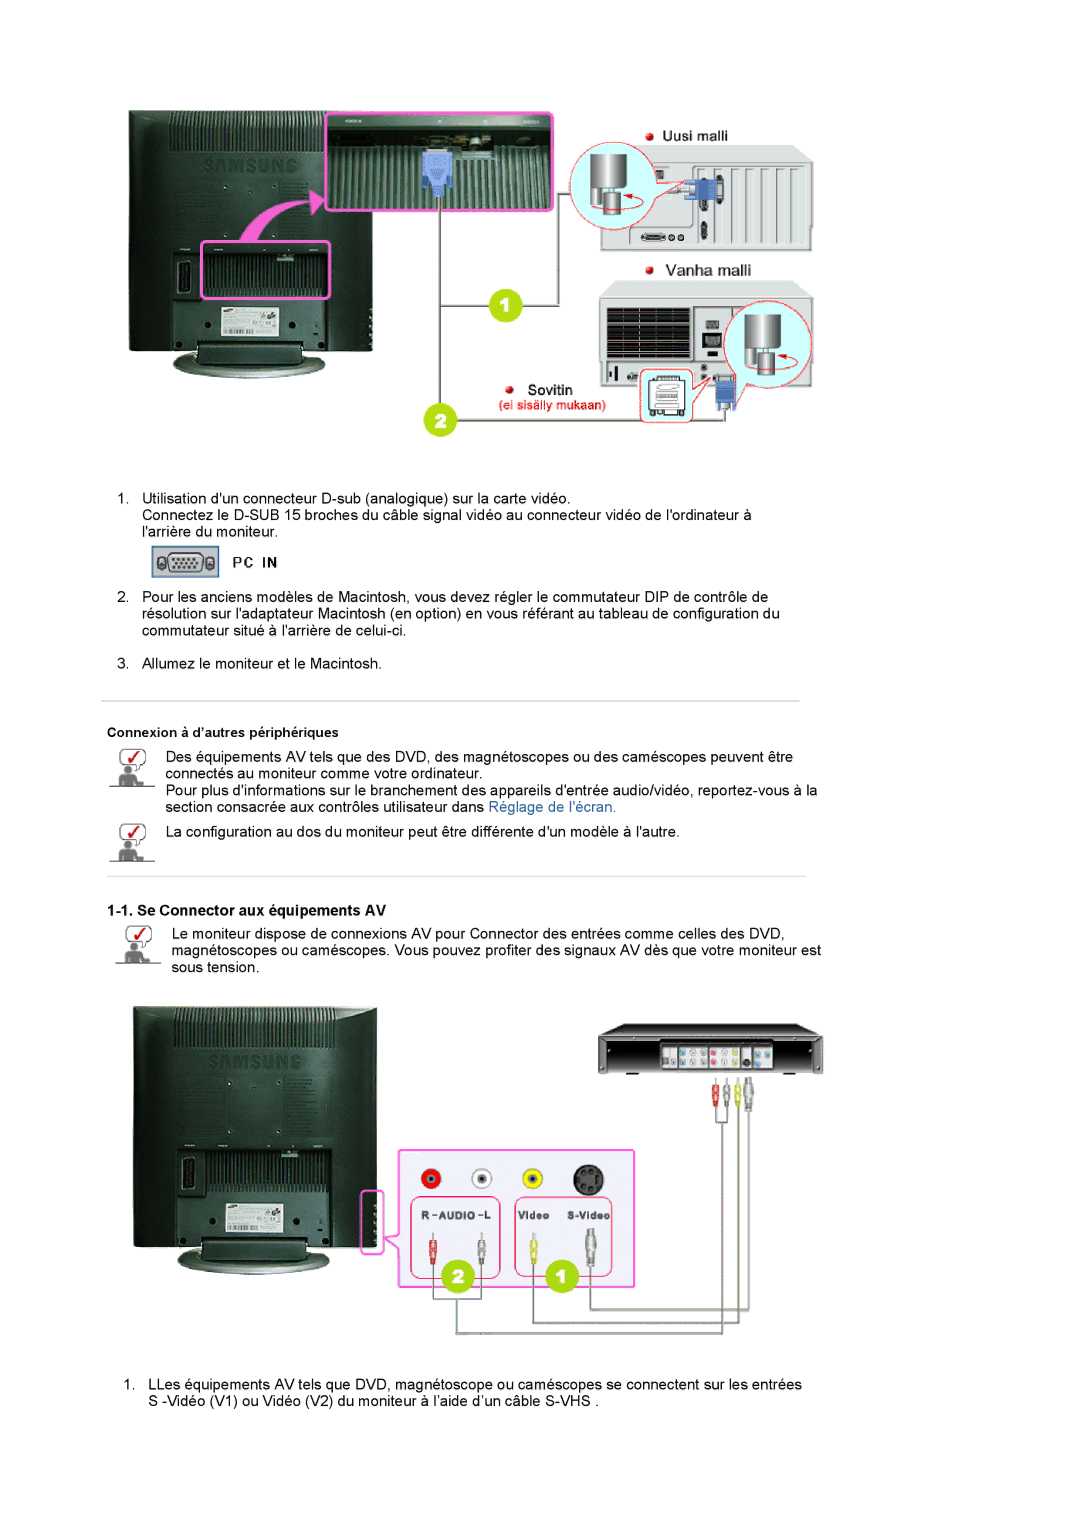 Samsung LS17MCASS/EDC manual Se Connector aux équipements AV 